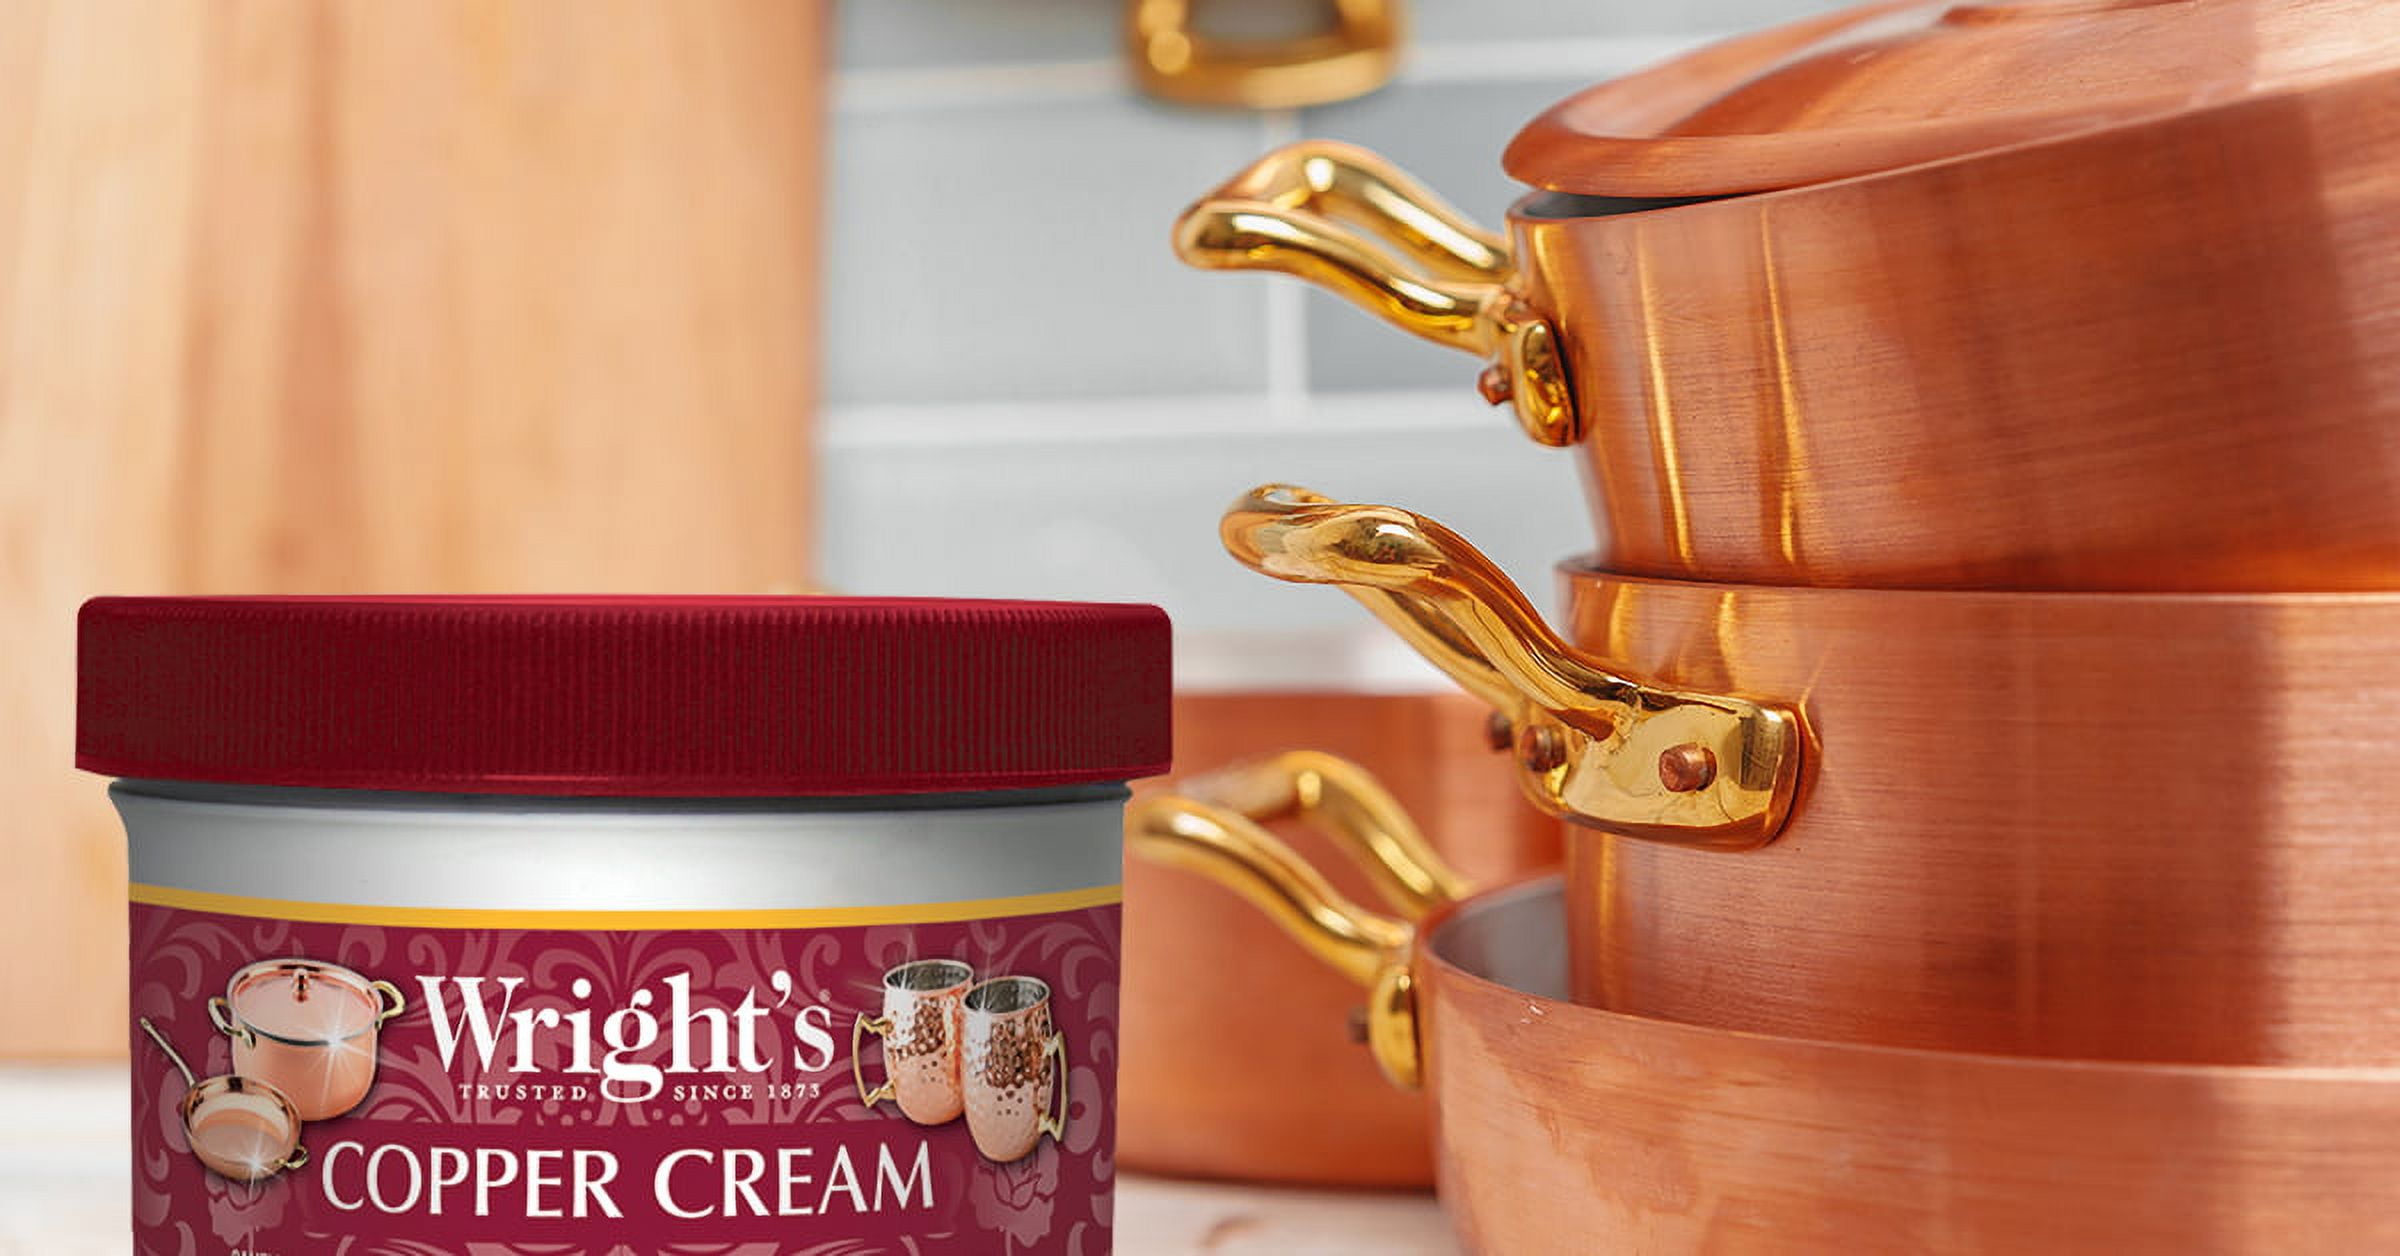 Wright's Copper Polish Cream - 8oz : Target